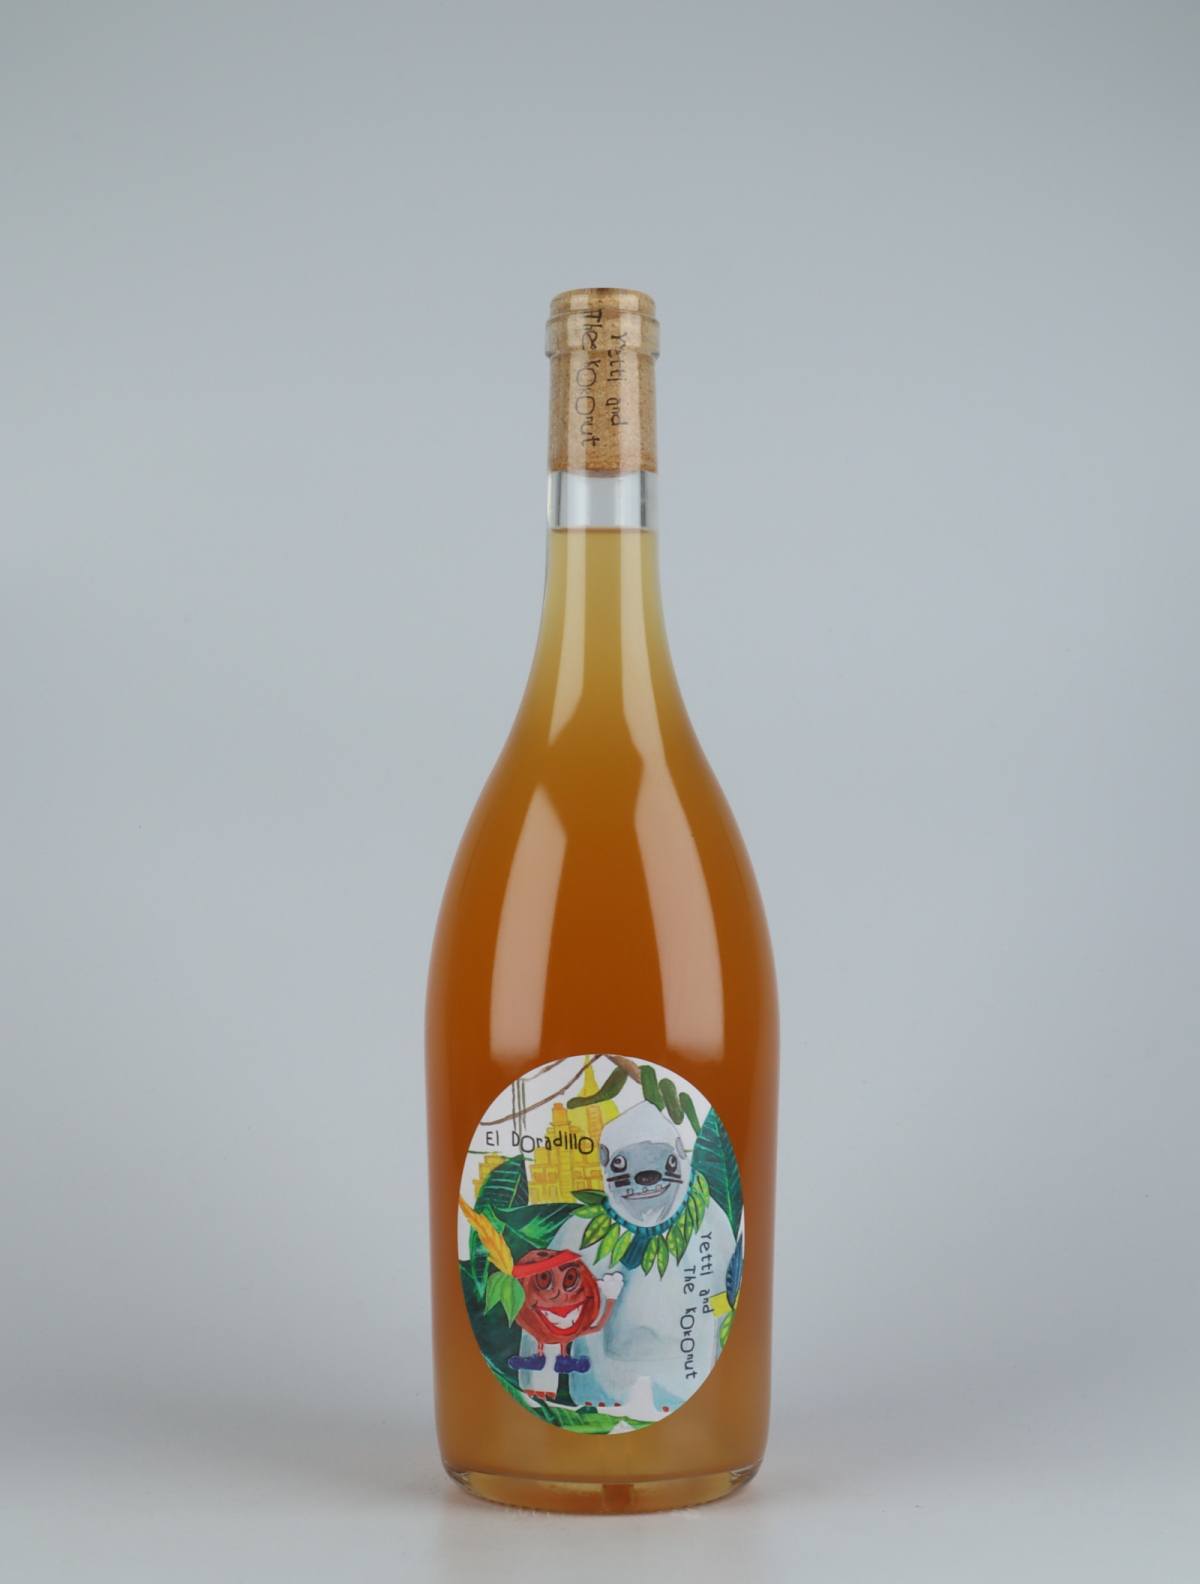 A bottle 2020 El Doradillo Orange wine from Yetti and the Kokonut, Adelaide Hills in 